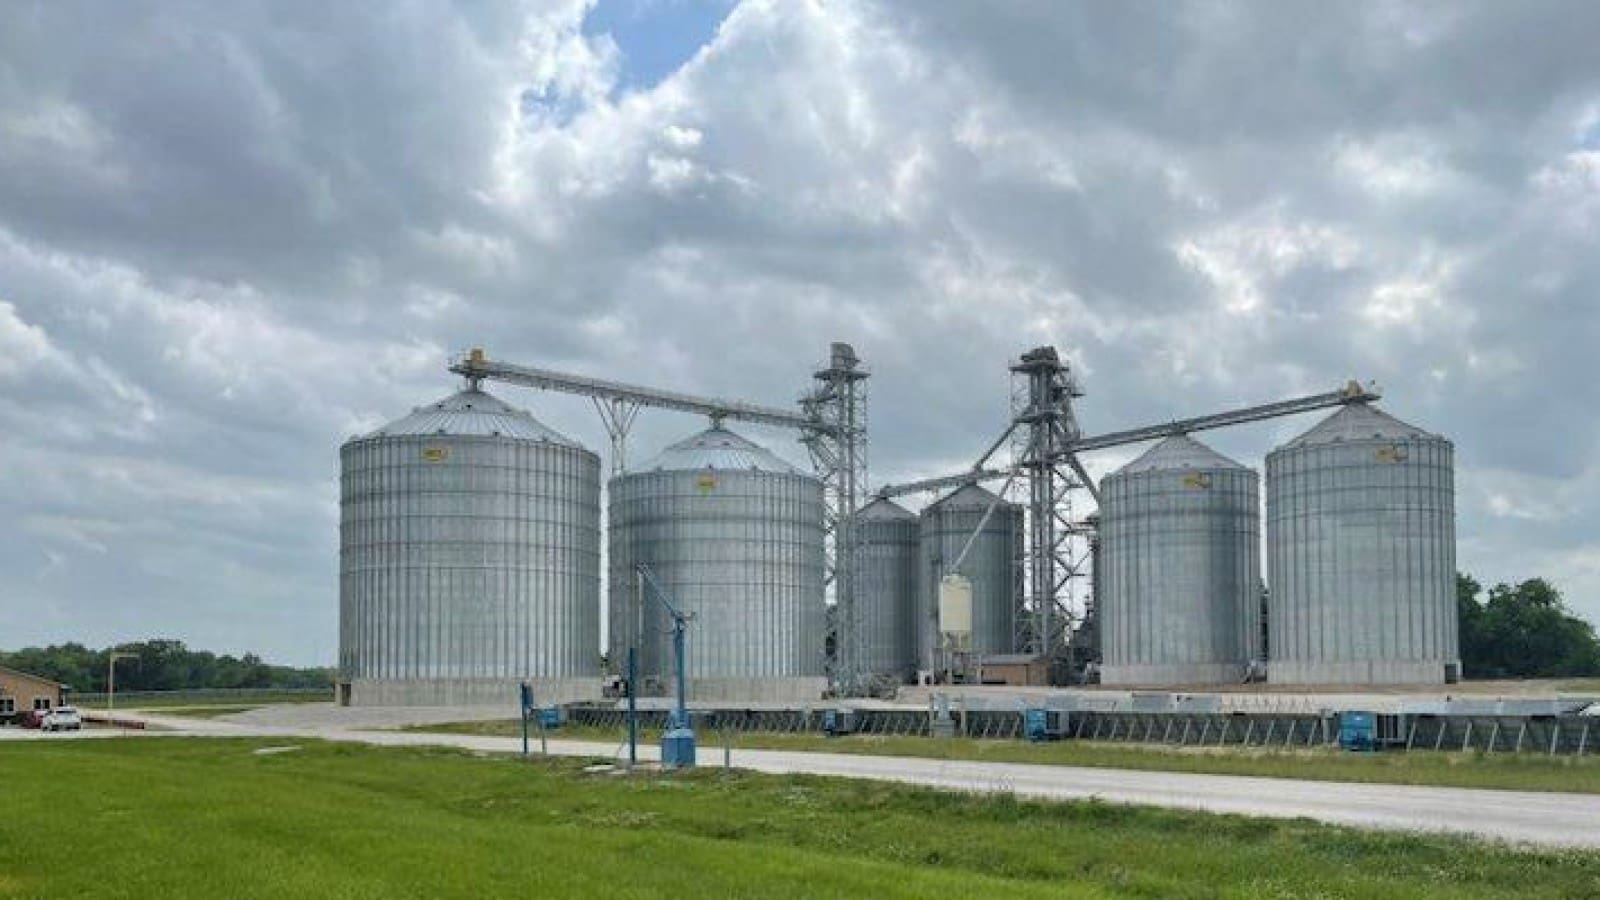 Scoular’s innovative sustainability hub transforms Missouri grain facility